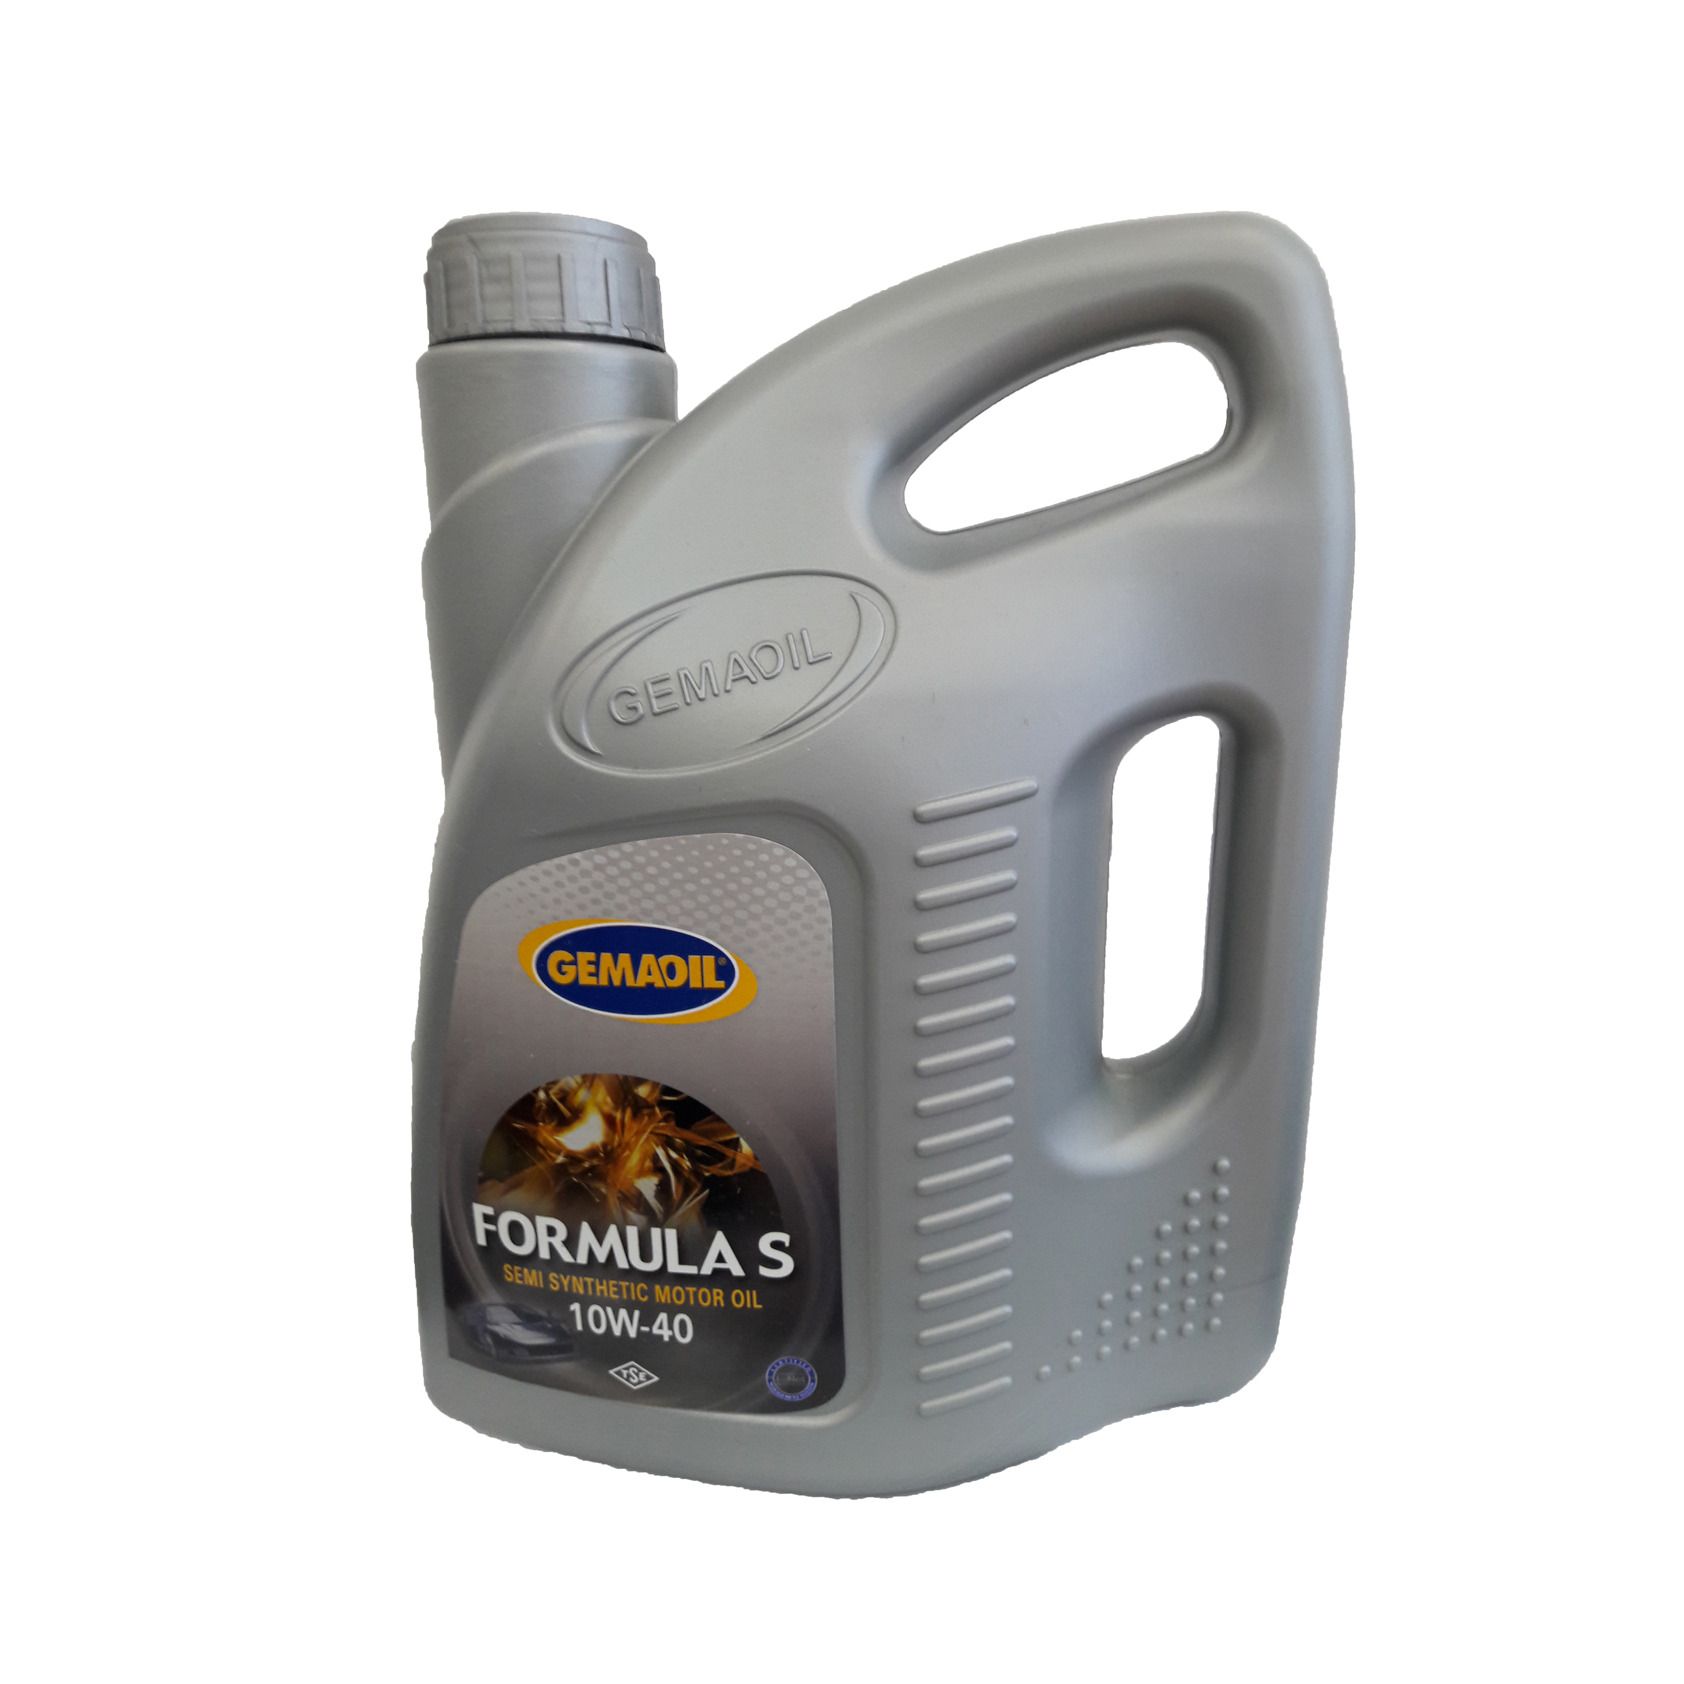 GEMA OIL FORMULA S 10W-40,(Semi Synthetic) 1L